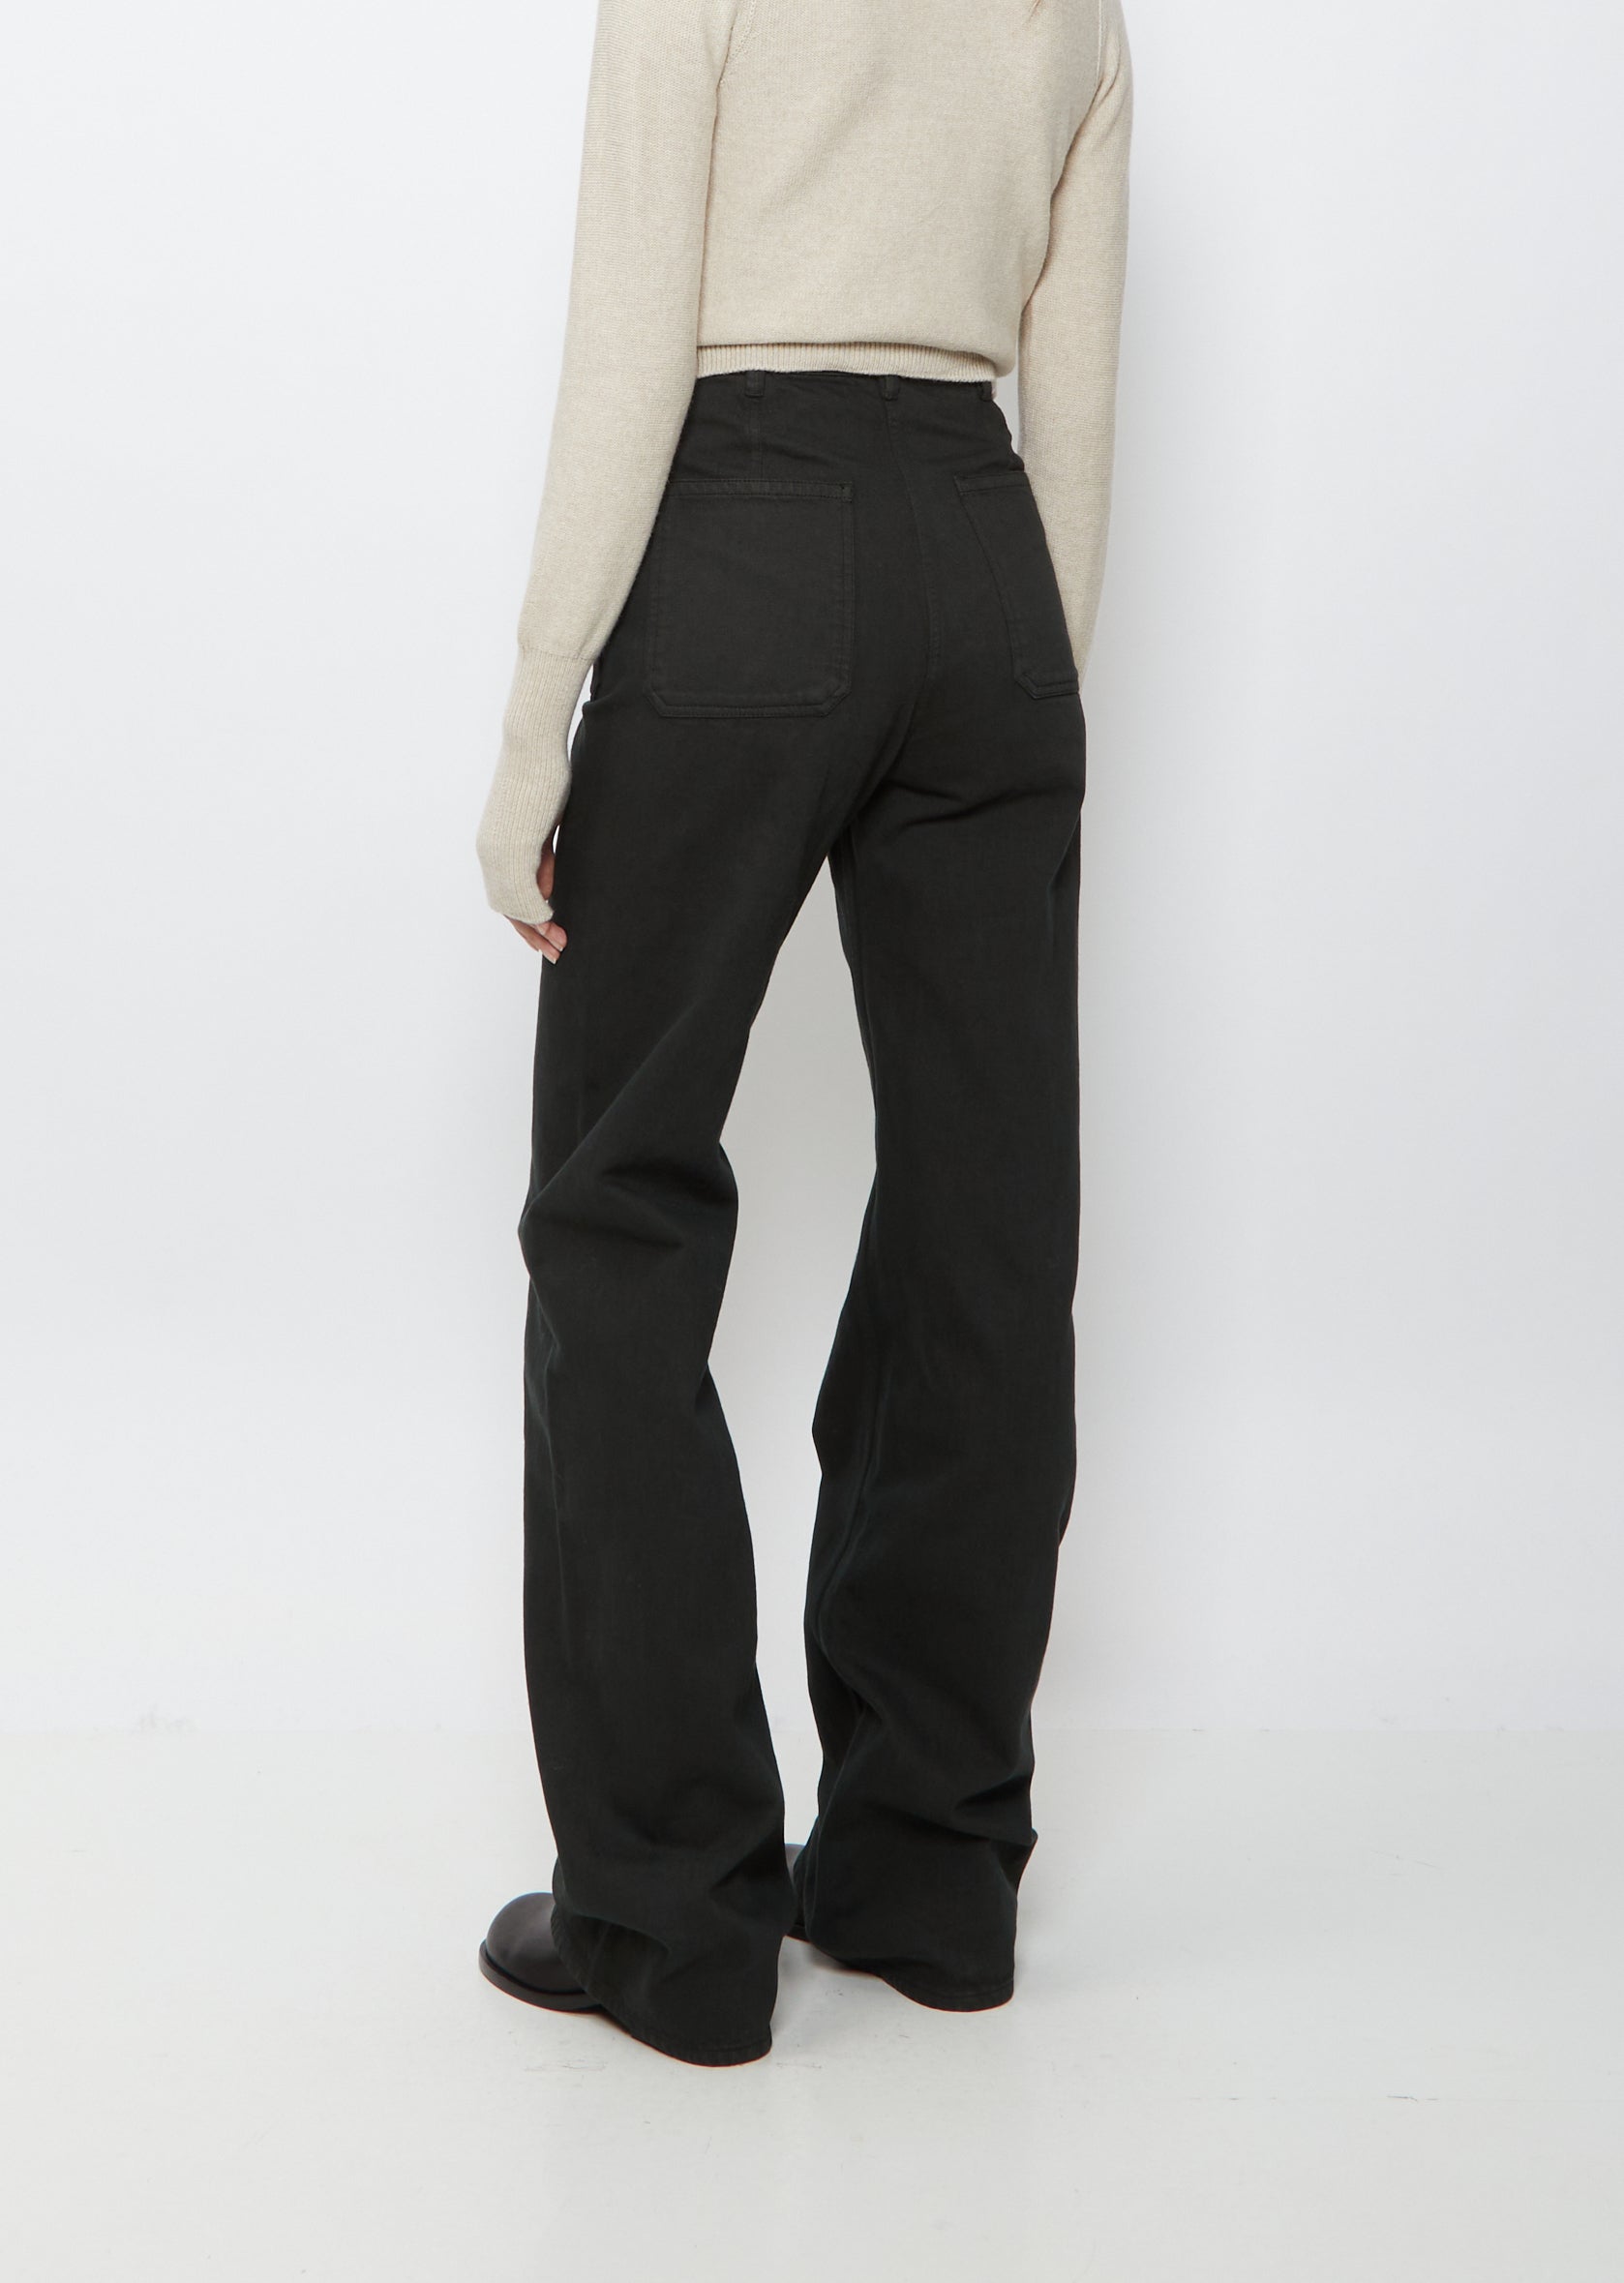 Lemaire Denim Sailor Pants - Black on Garmentory